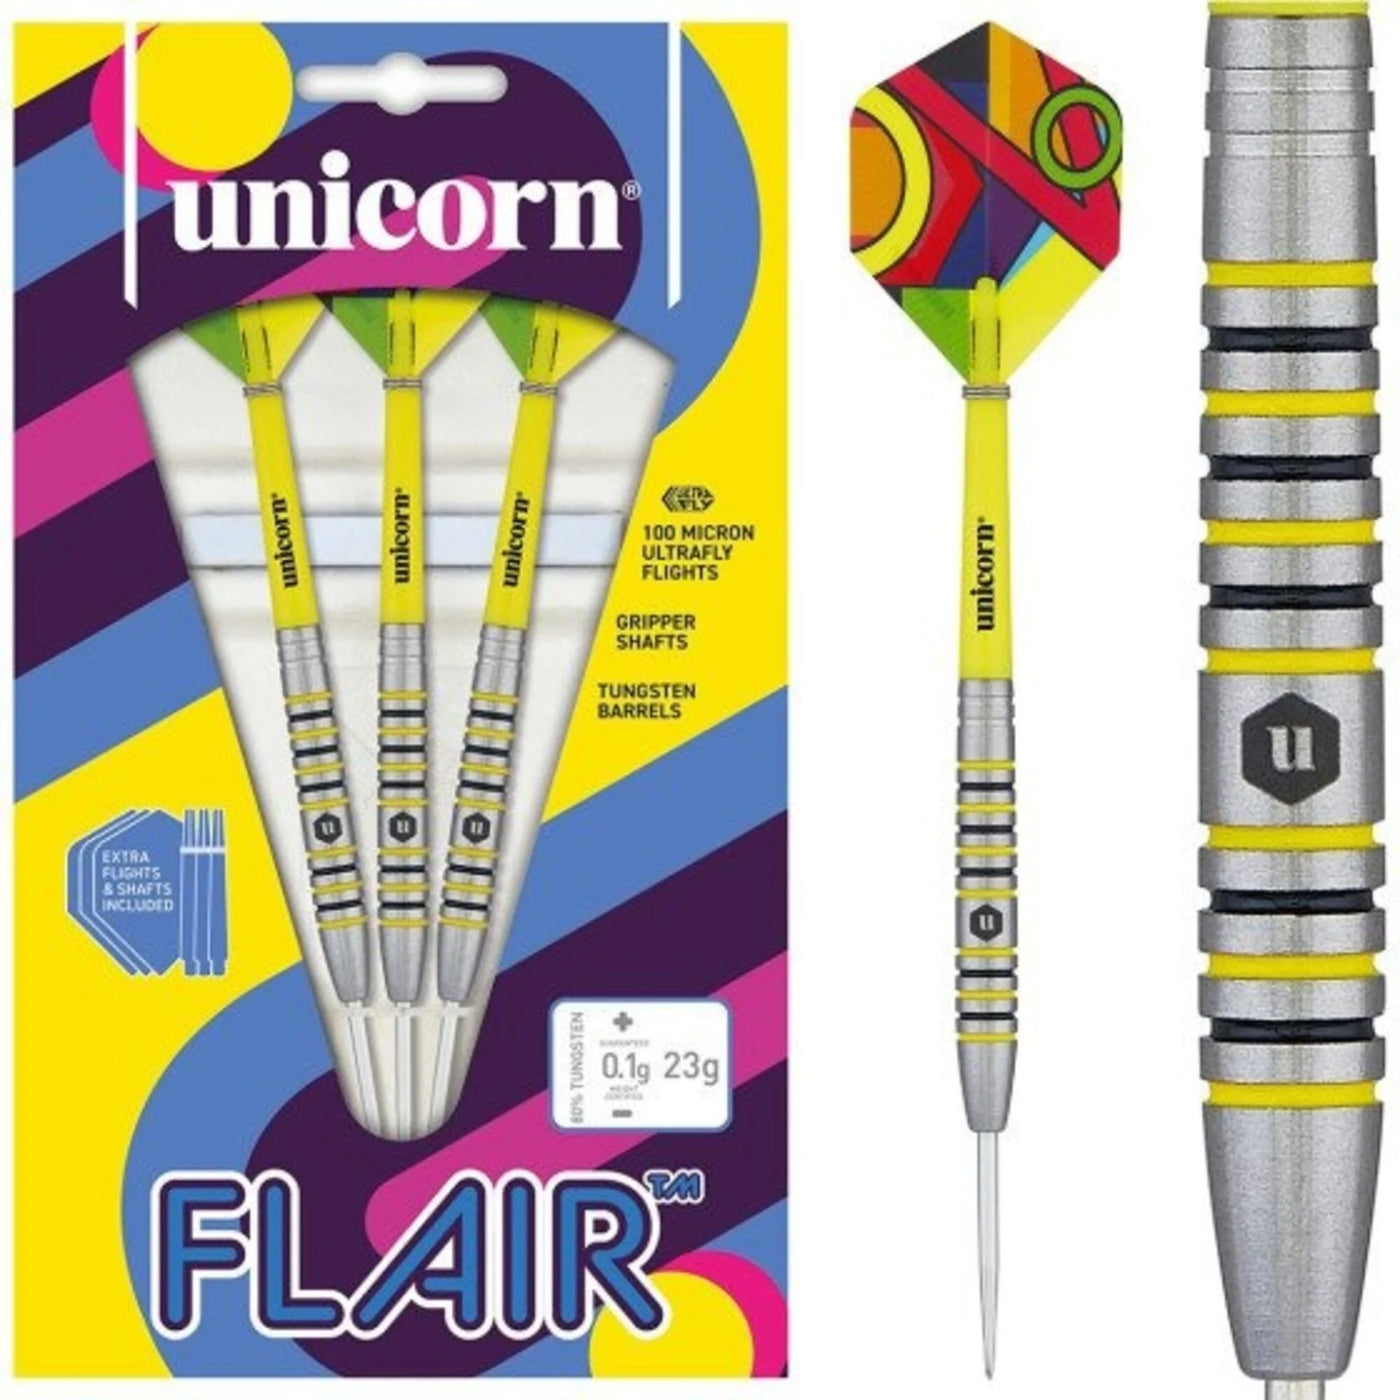 Unicorn Flair 4 80% - Steel Tip